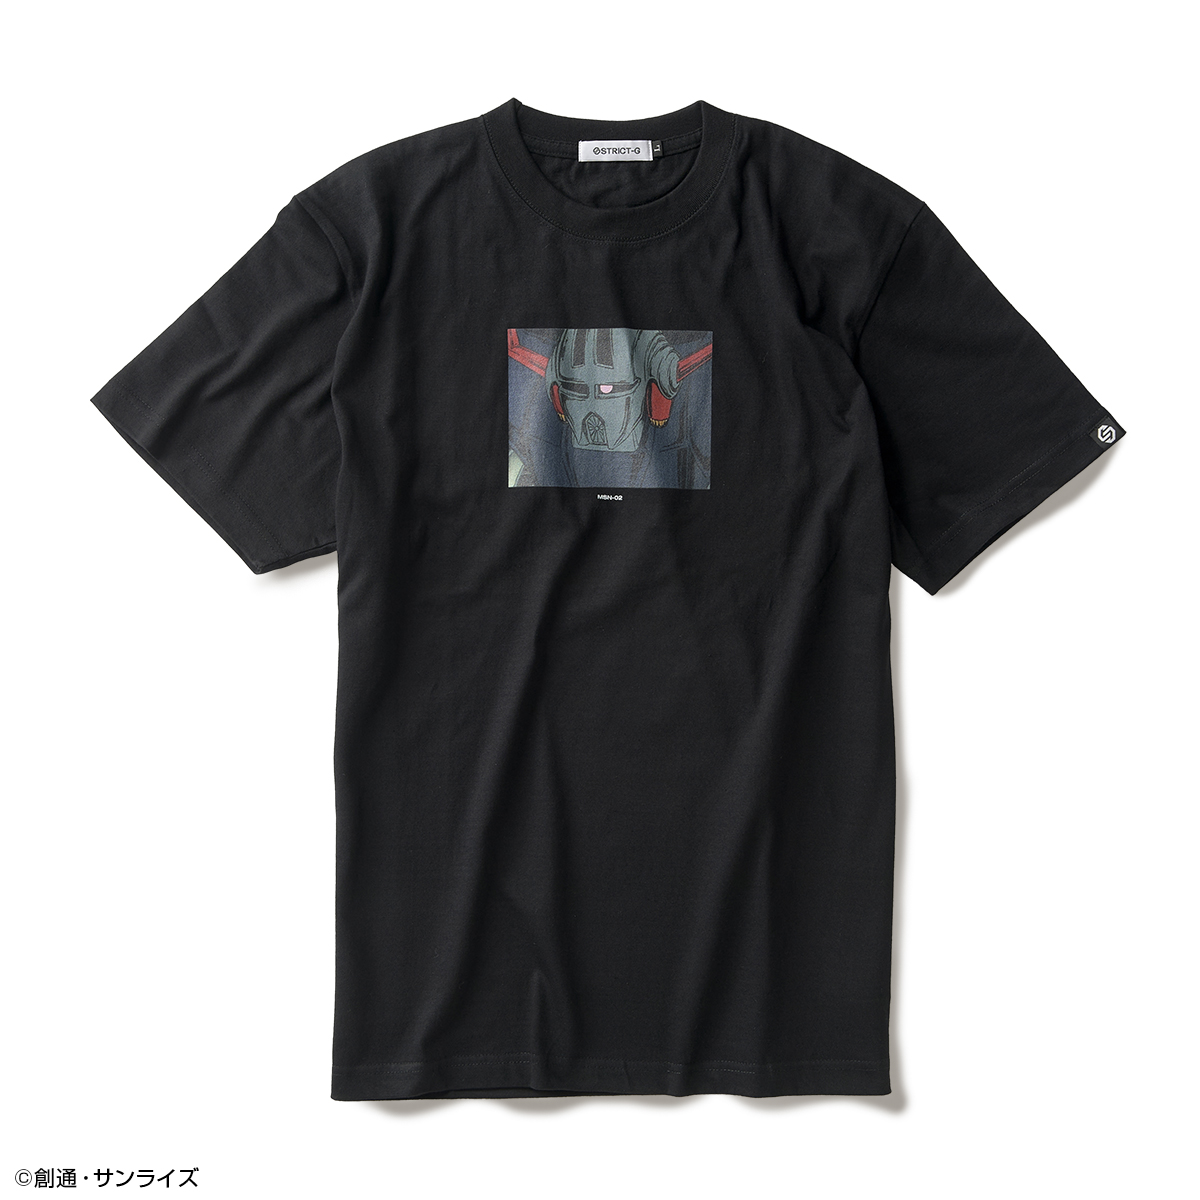 STRICT-G『機動戦士ガンダム』Tシャツコレクション CHAR AZNABLE 005